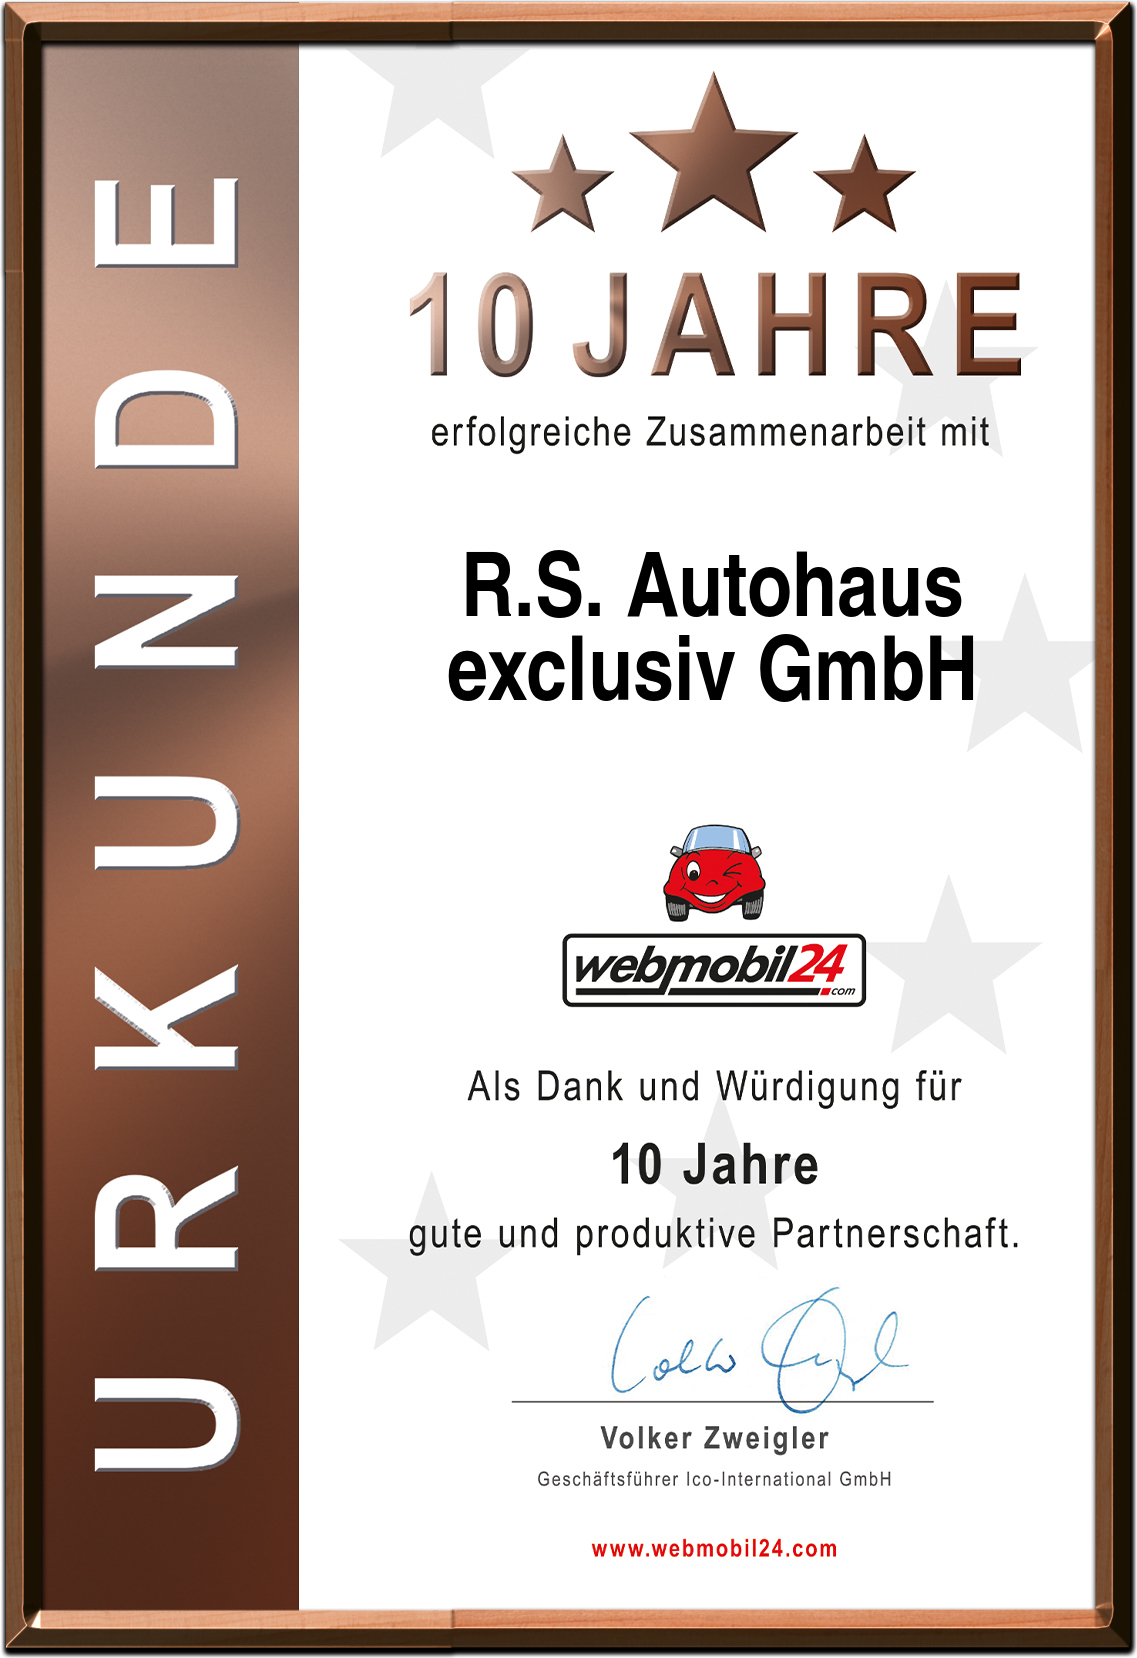 R.S. Autohausexclusiv GmbH